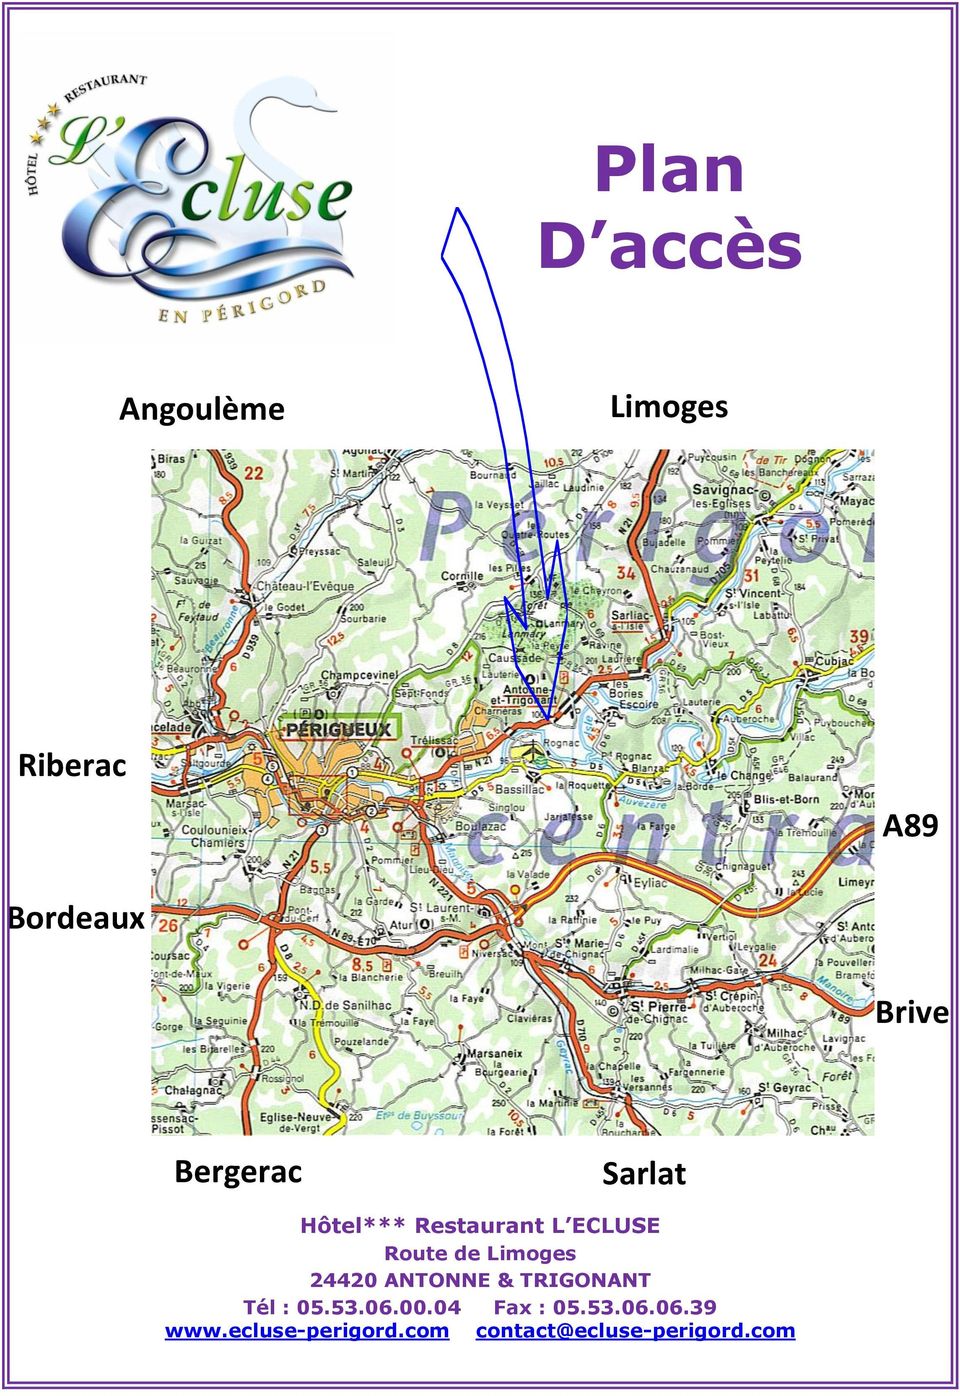 Limoges 24420 ANTONNE & TRIGONANT Tél : 05.53.06.00.